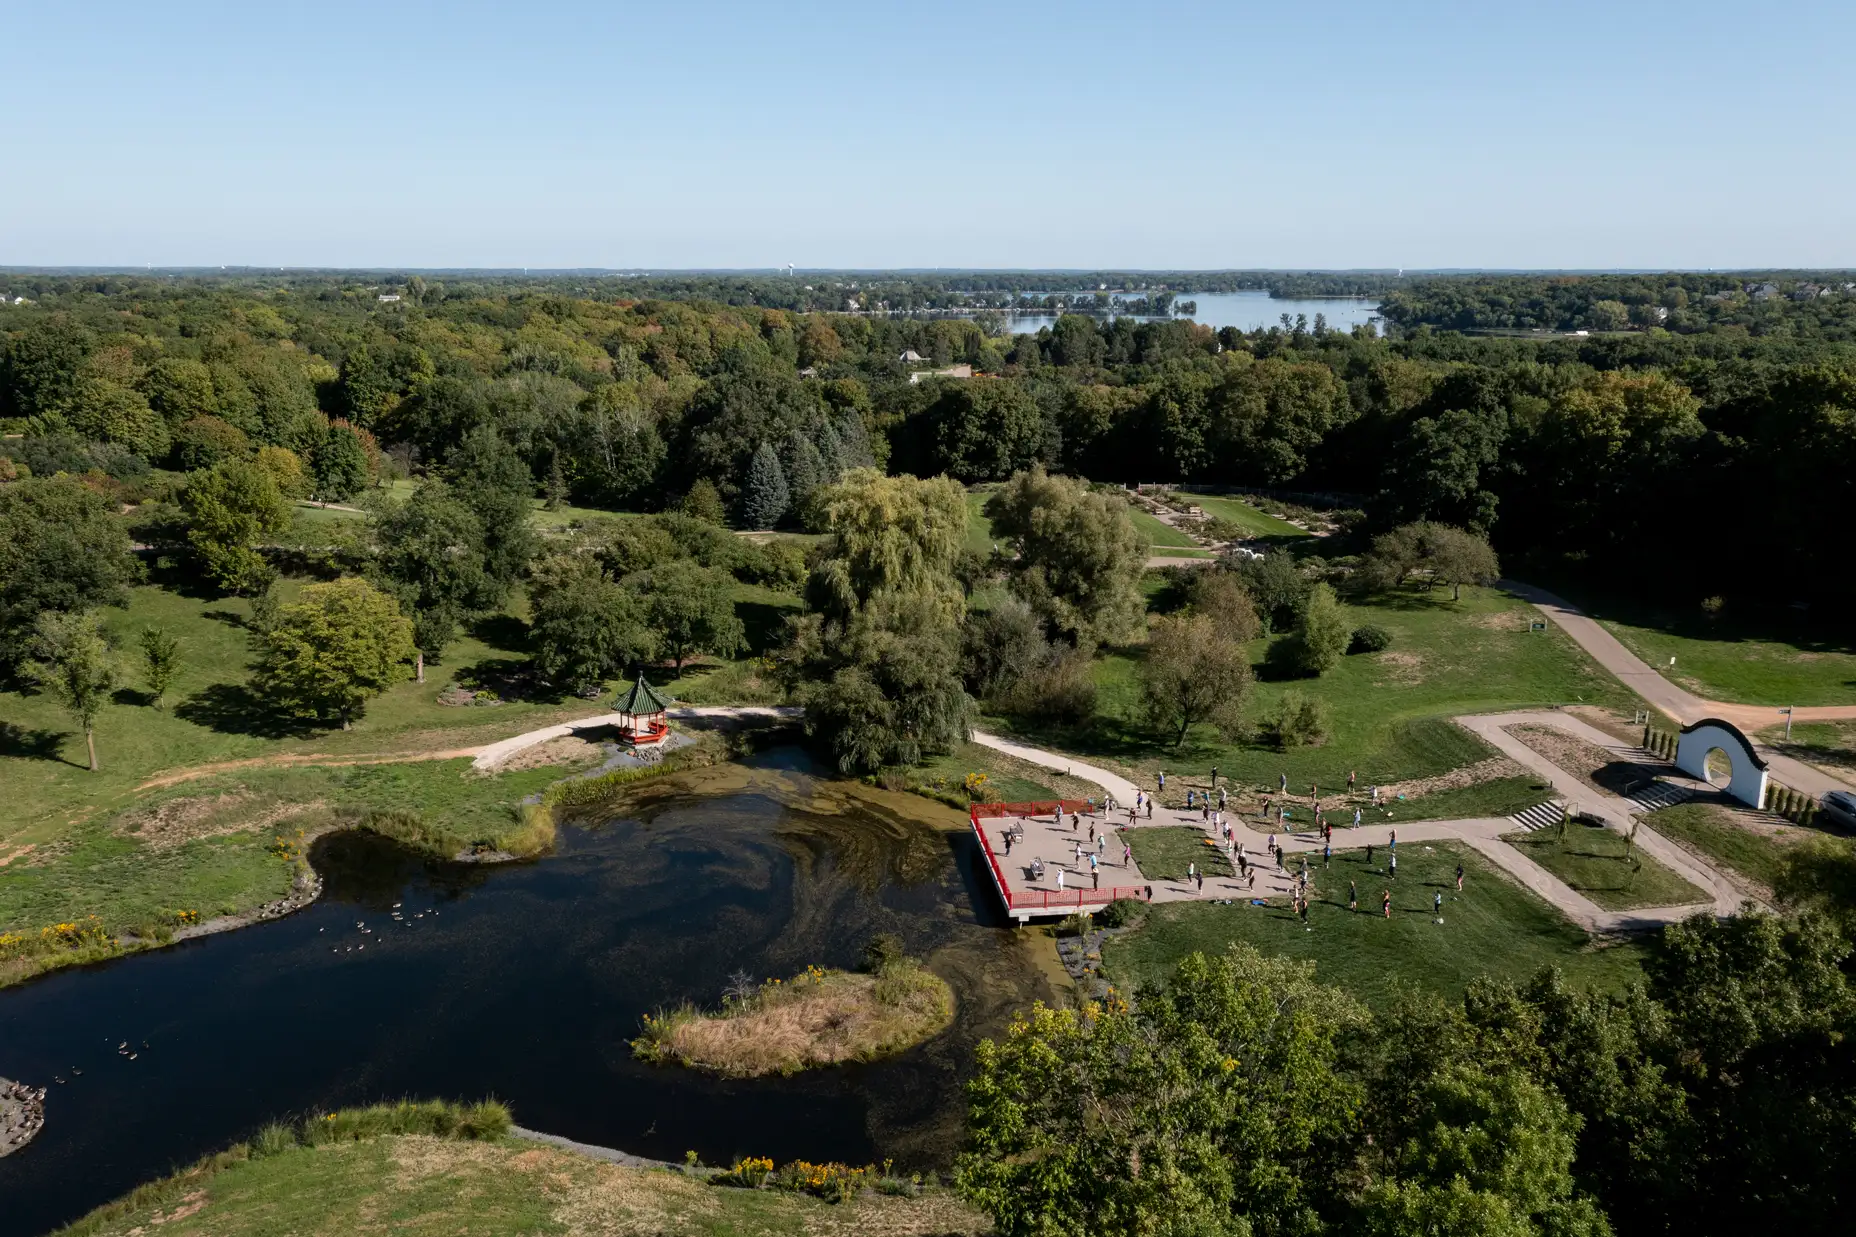 Aerial view of the Arboretum in Chanhassen Minnesota